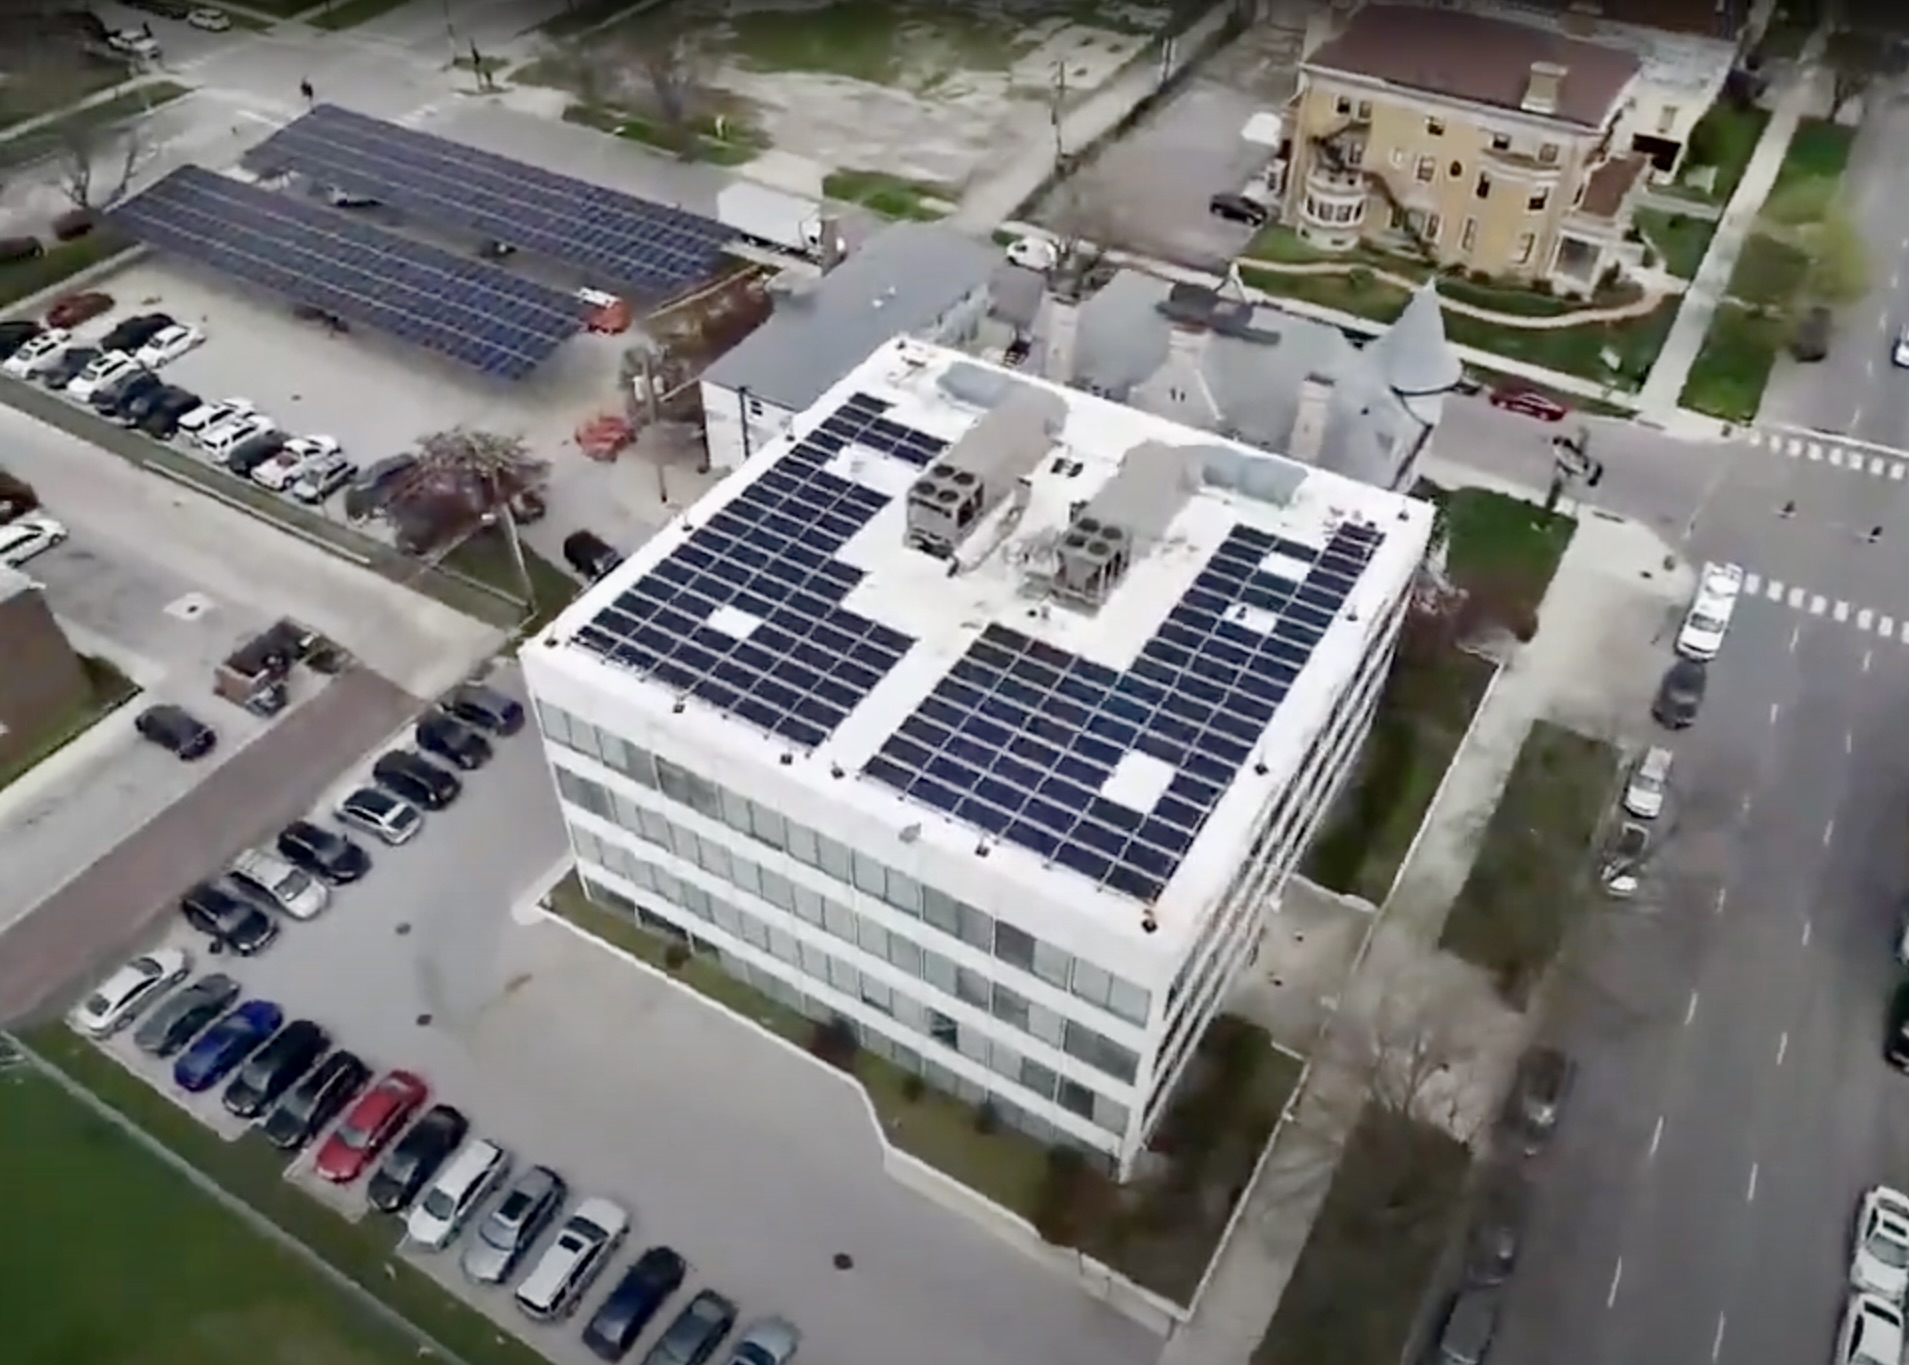 Terrasmart Supplies Solar Carport for Chicago’s Largest Rooftop Solar System